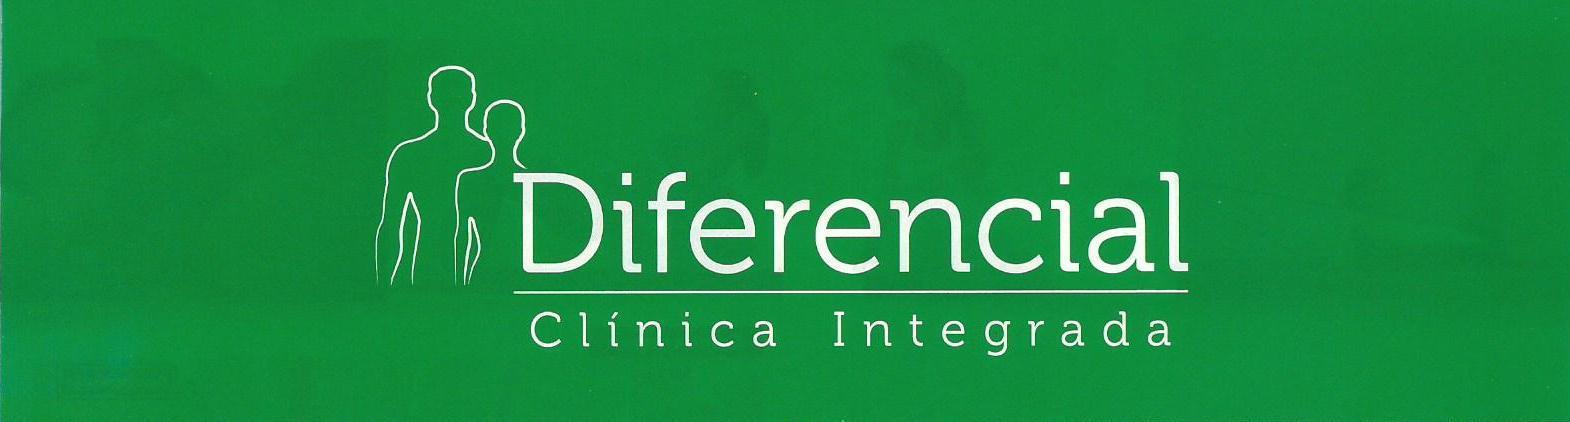 Diferencial Clinica Integrada logo